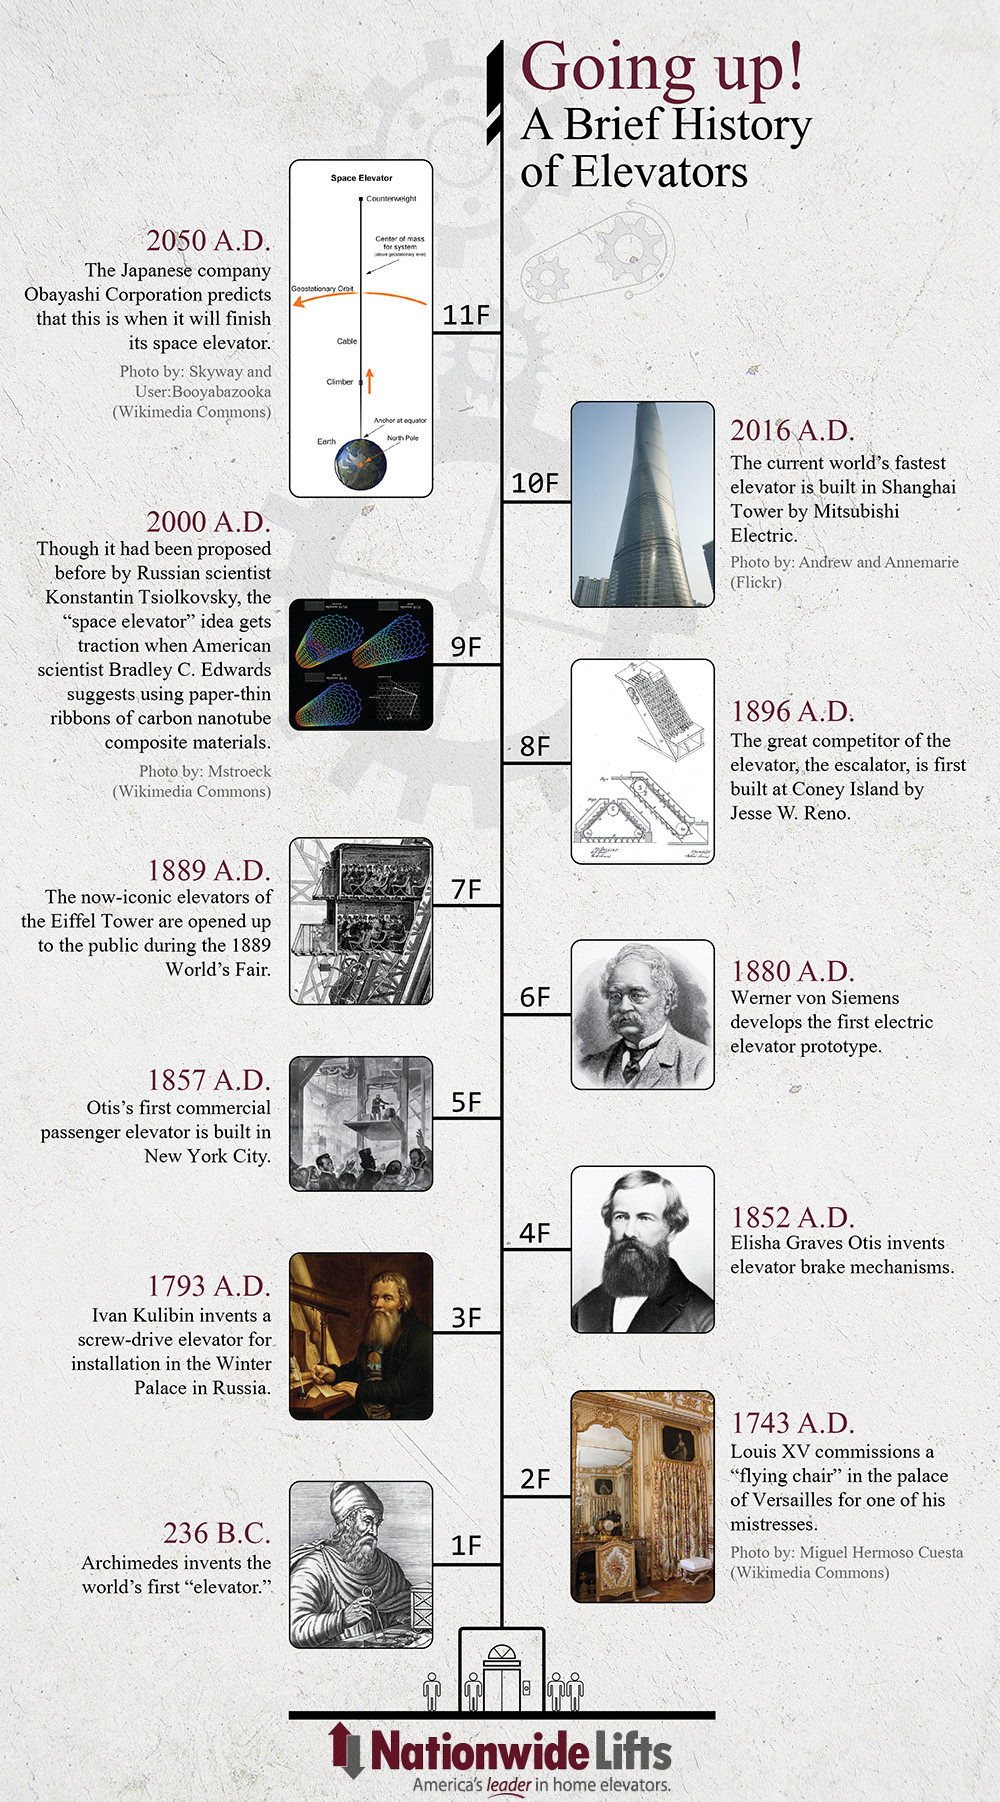 A Brief History of Elevators